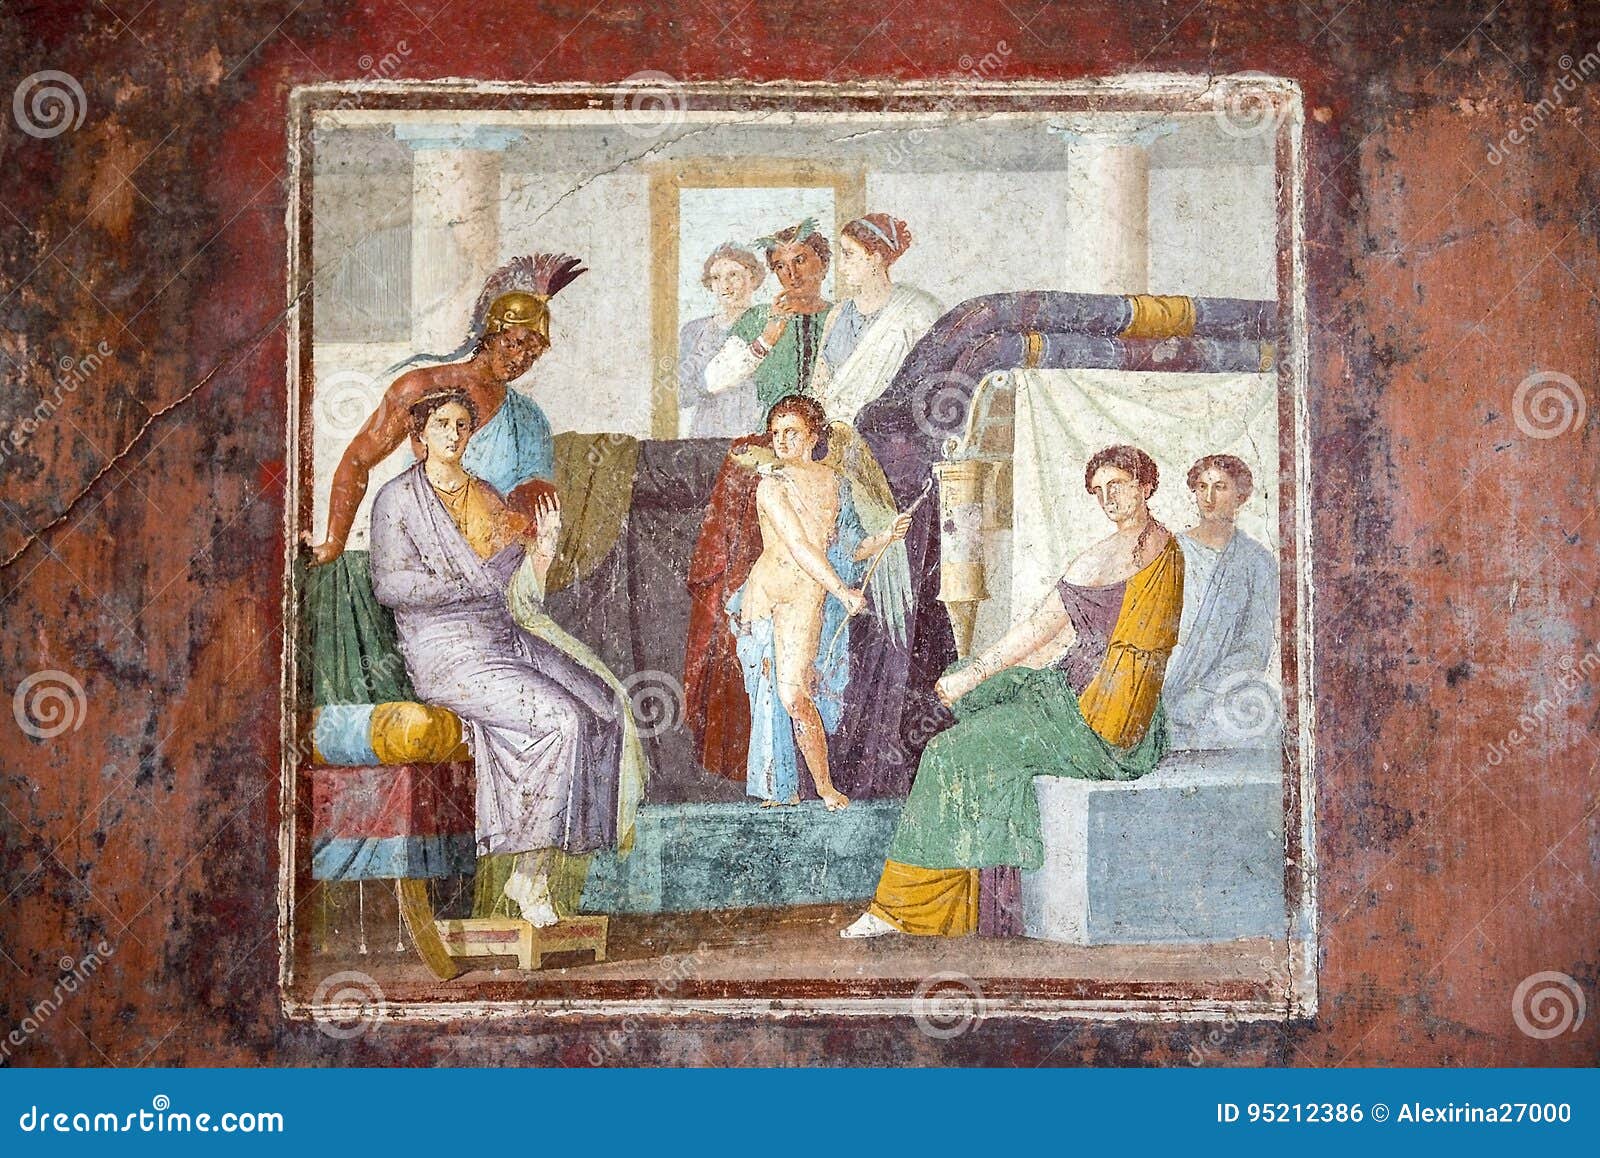 frescoes in pompeii, campania region, italy